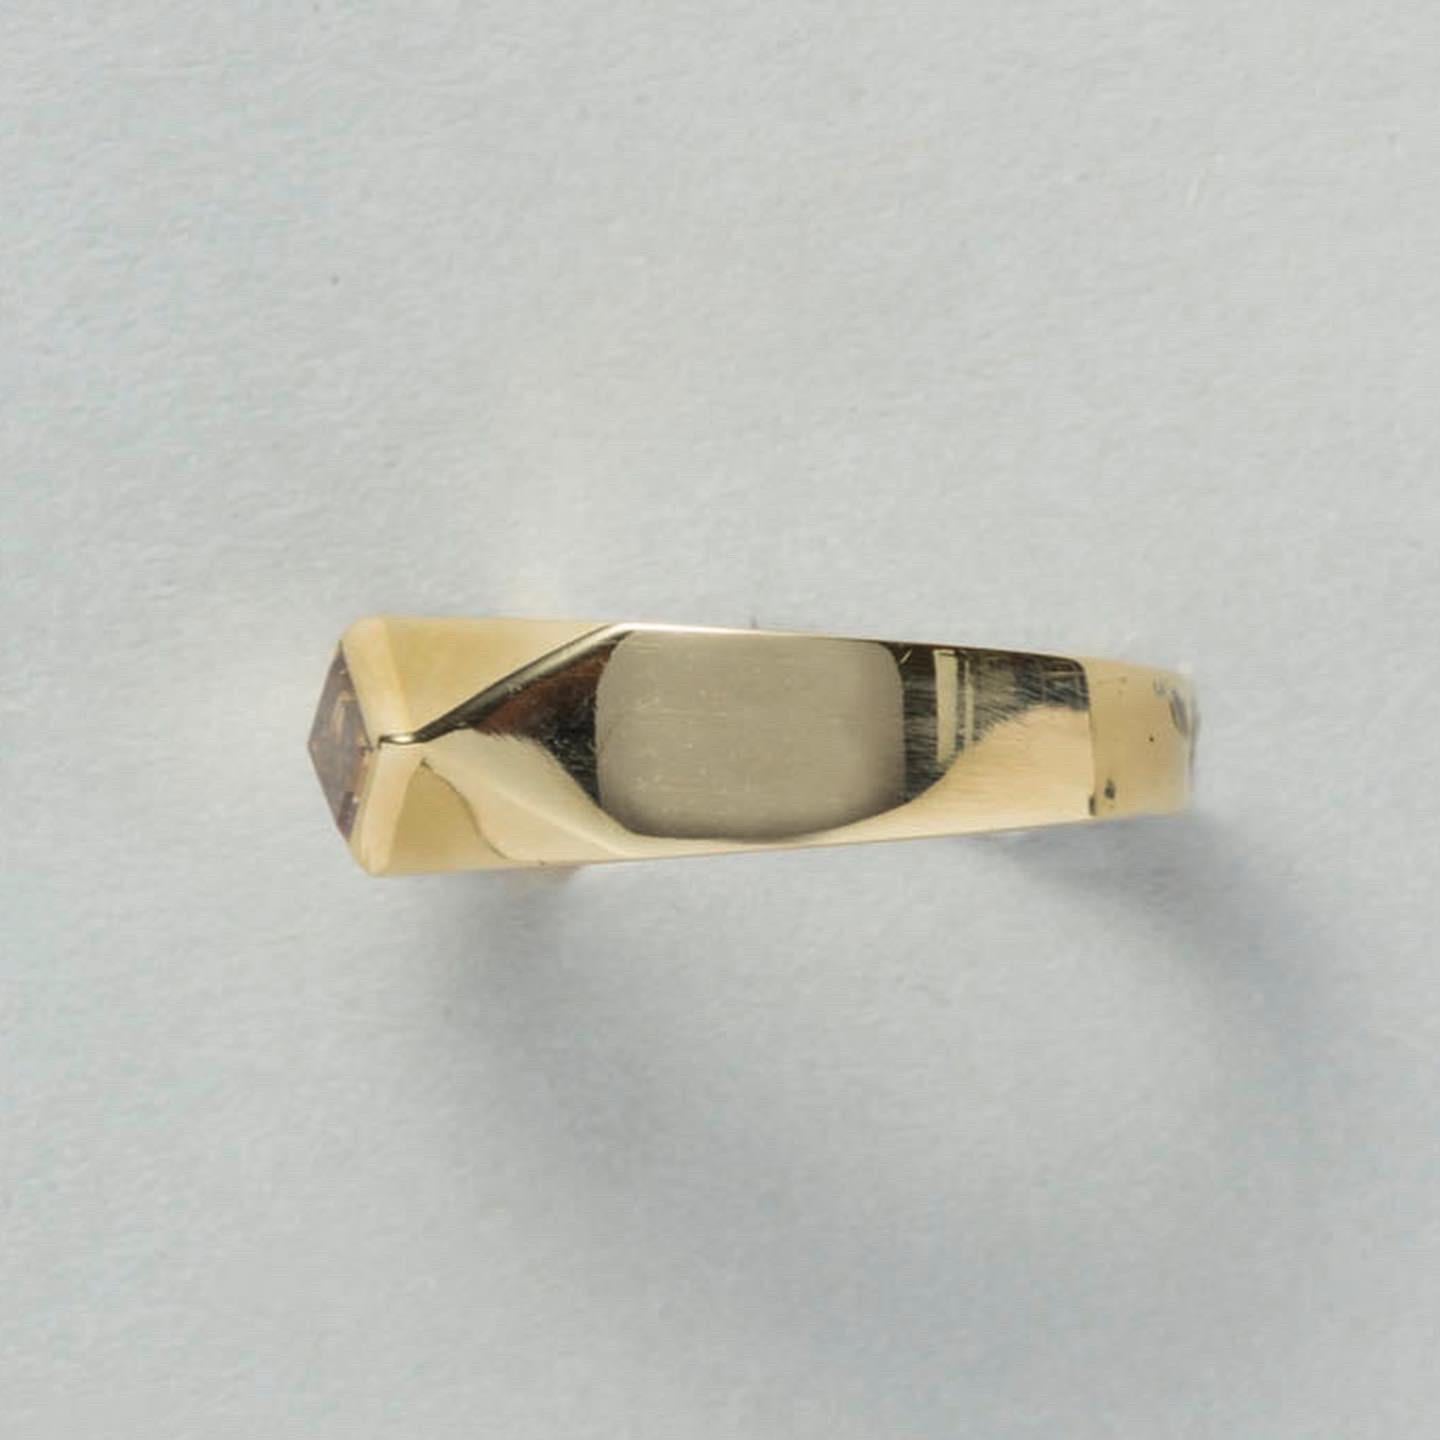 Kite Cut 18 Carat Gold Ring Bezel Set with a Brown Kite Shape Diamond